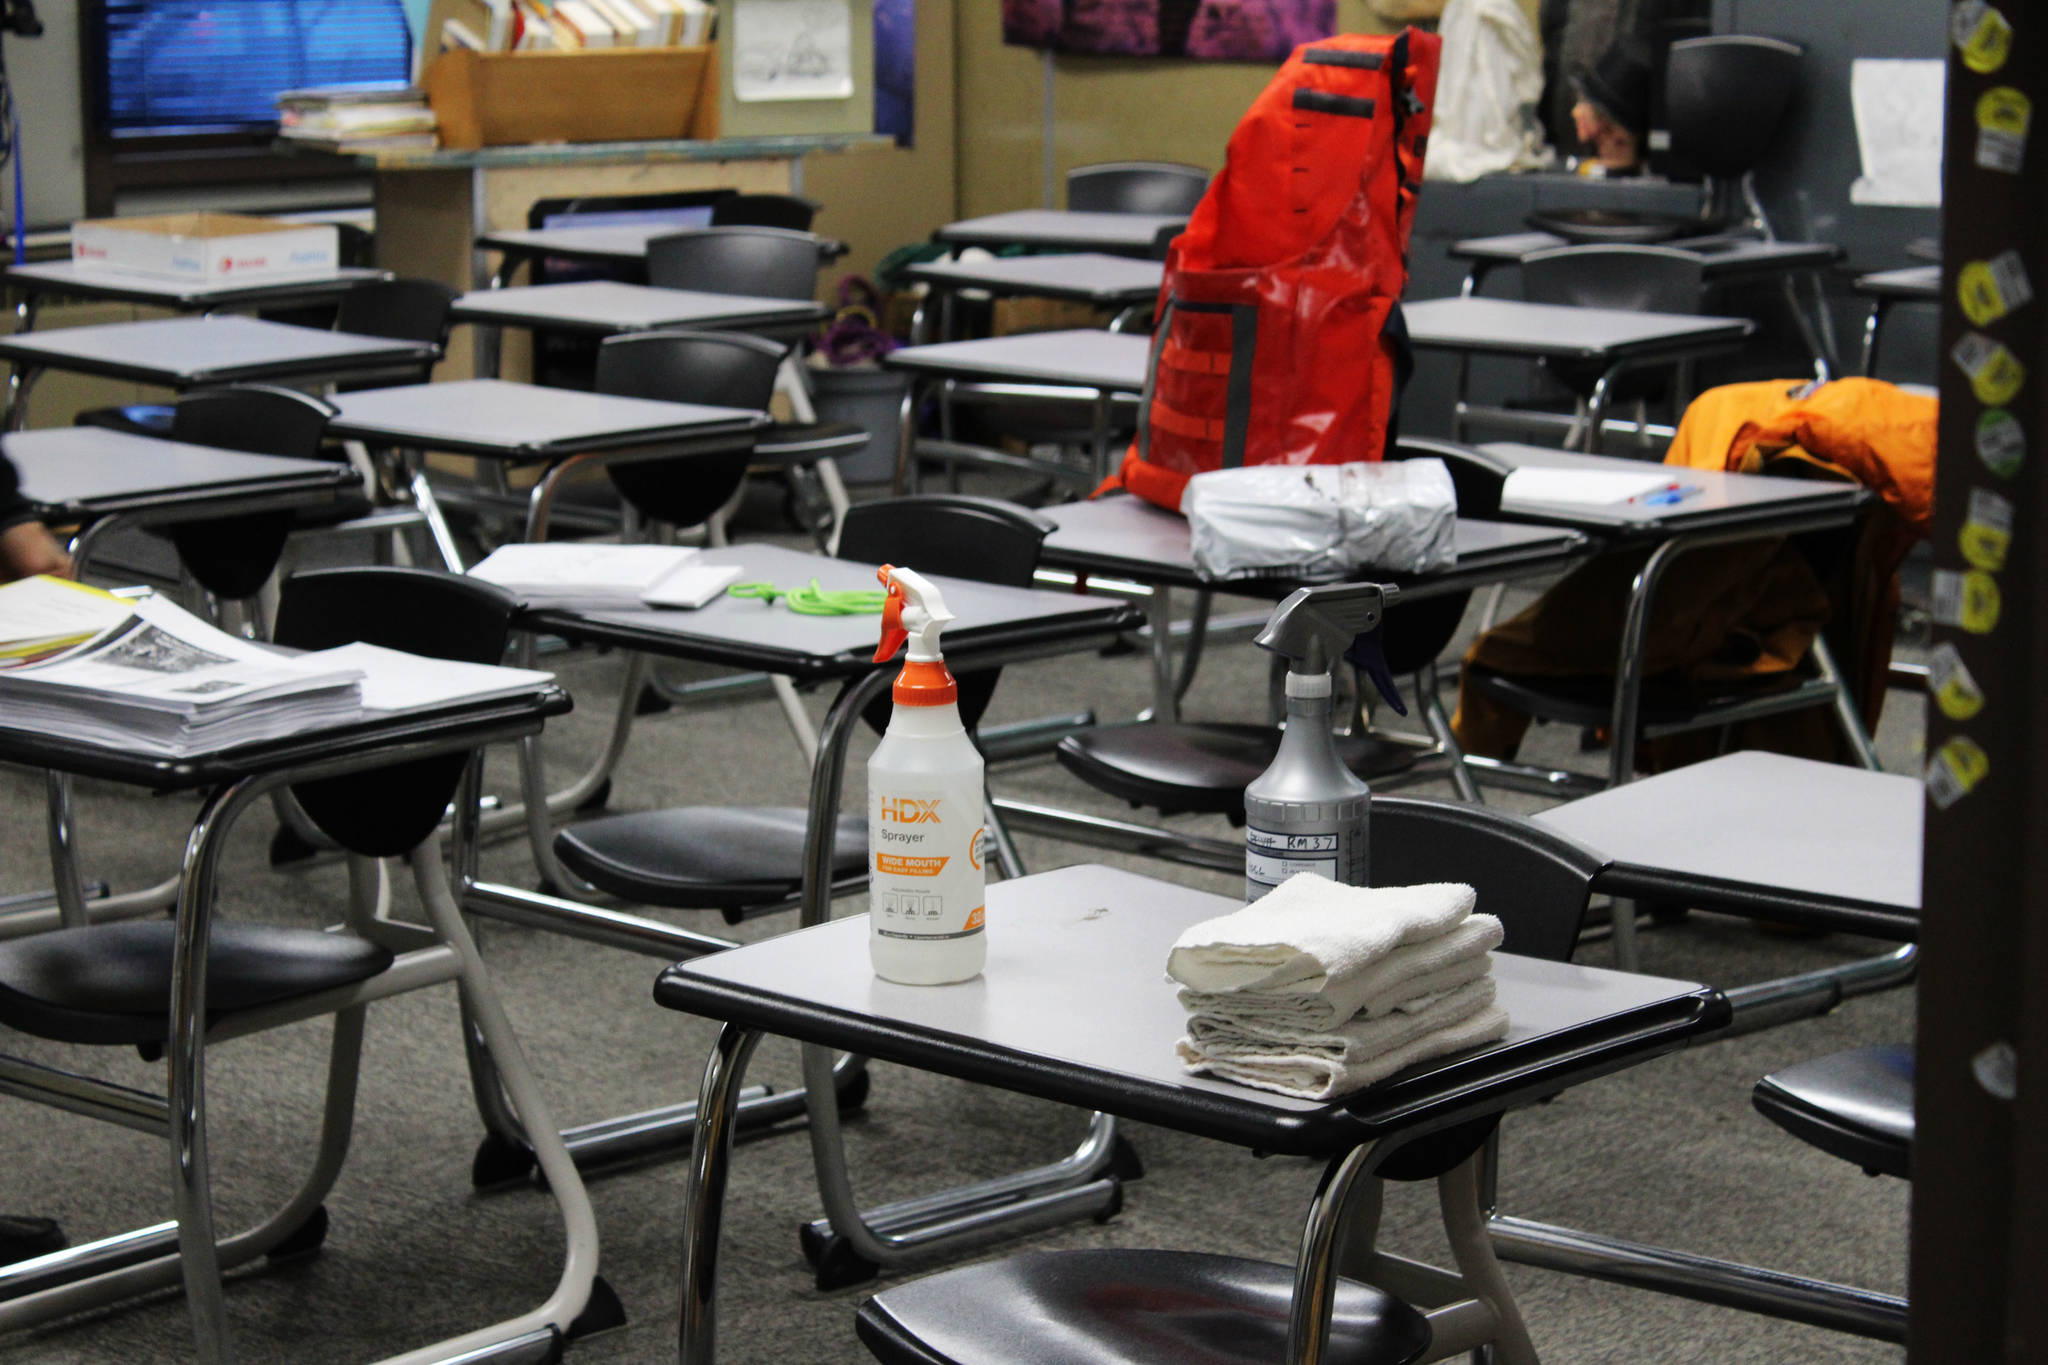 Supplies for sanitizing areas are seen inside of a classroom at Kenai Middle School on Friday, Jan. 8, 2021, in Kenai, Alaska. (Ashlyn O’Hara/Peninsula Clarion)